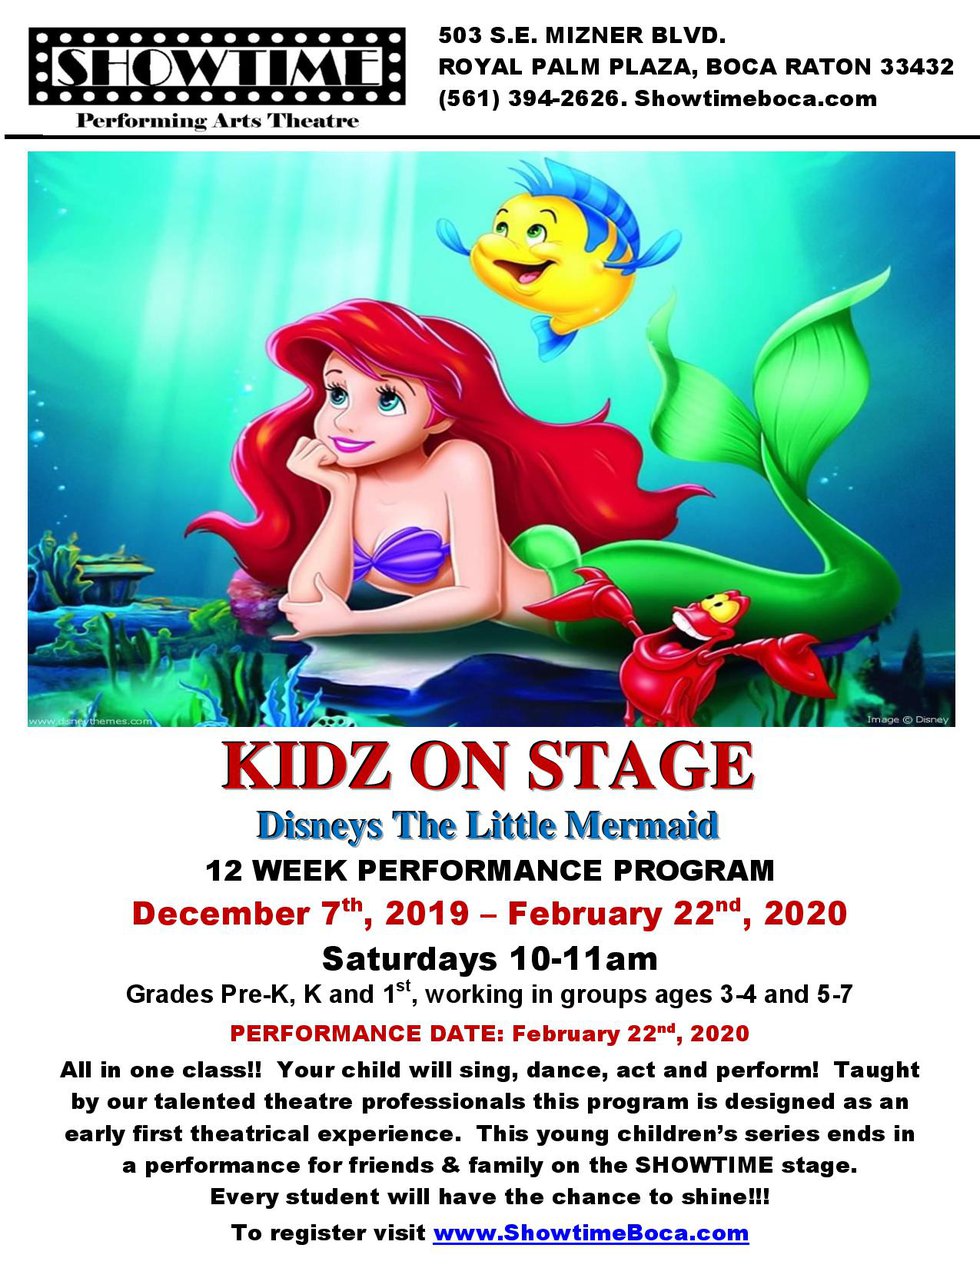 KIDZ ON STAGE Disneys The Little Mermaid 2019-20.jpg